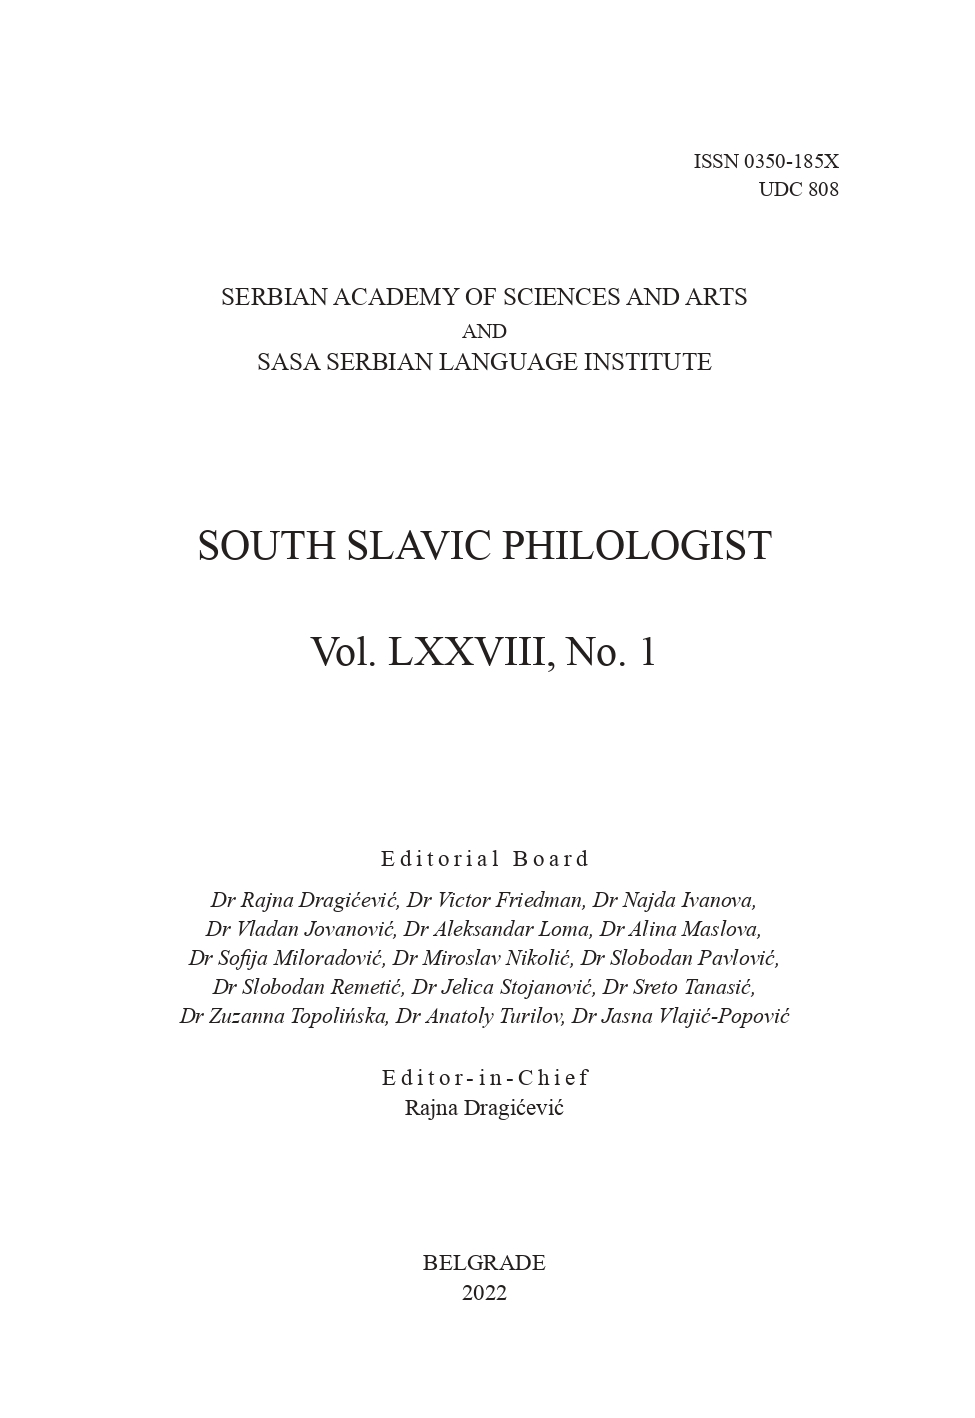 Dragana Veljković Stanković, Ivana Đorđev. Metaphors and analogies in Serbian language teaching - cognitive approach. Beograd: Jasen, 2021, 395 pages. Cover Image